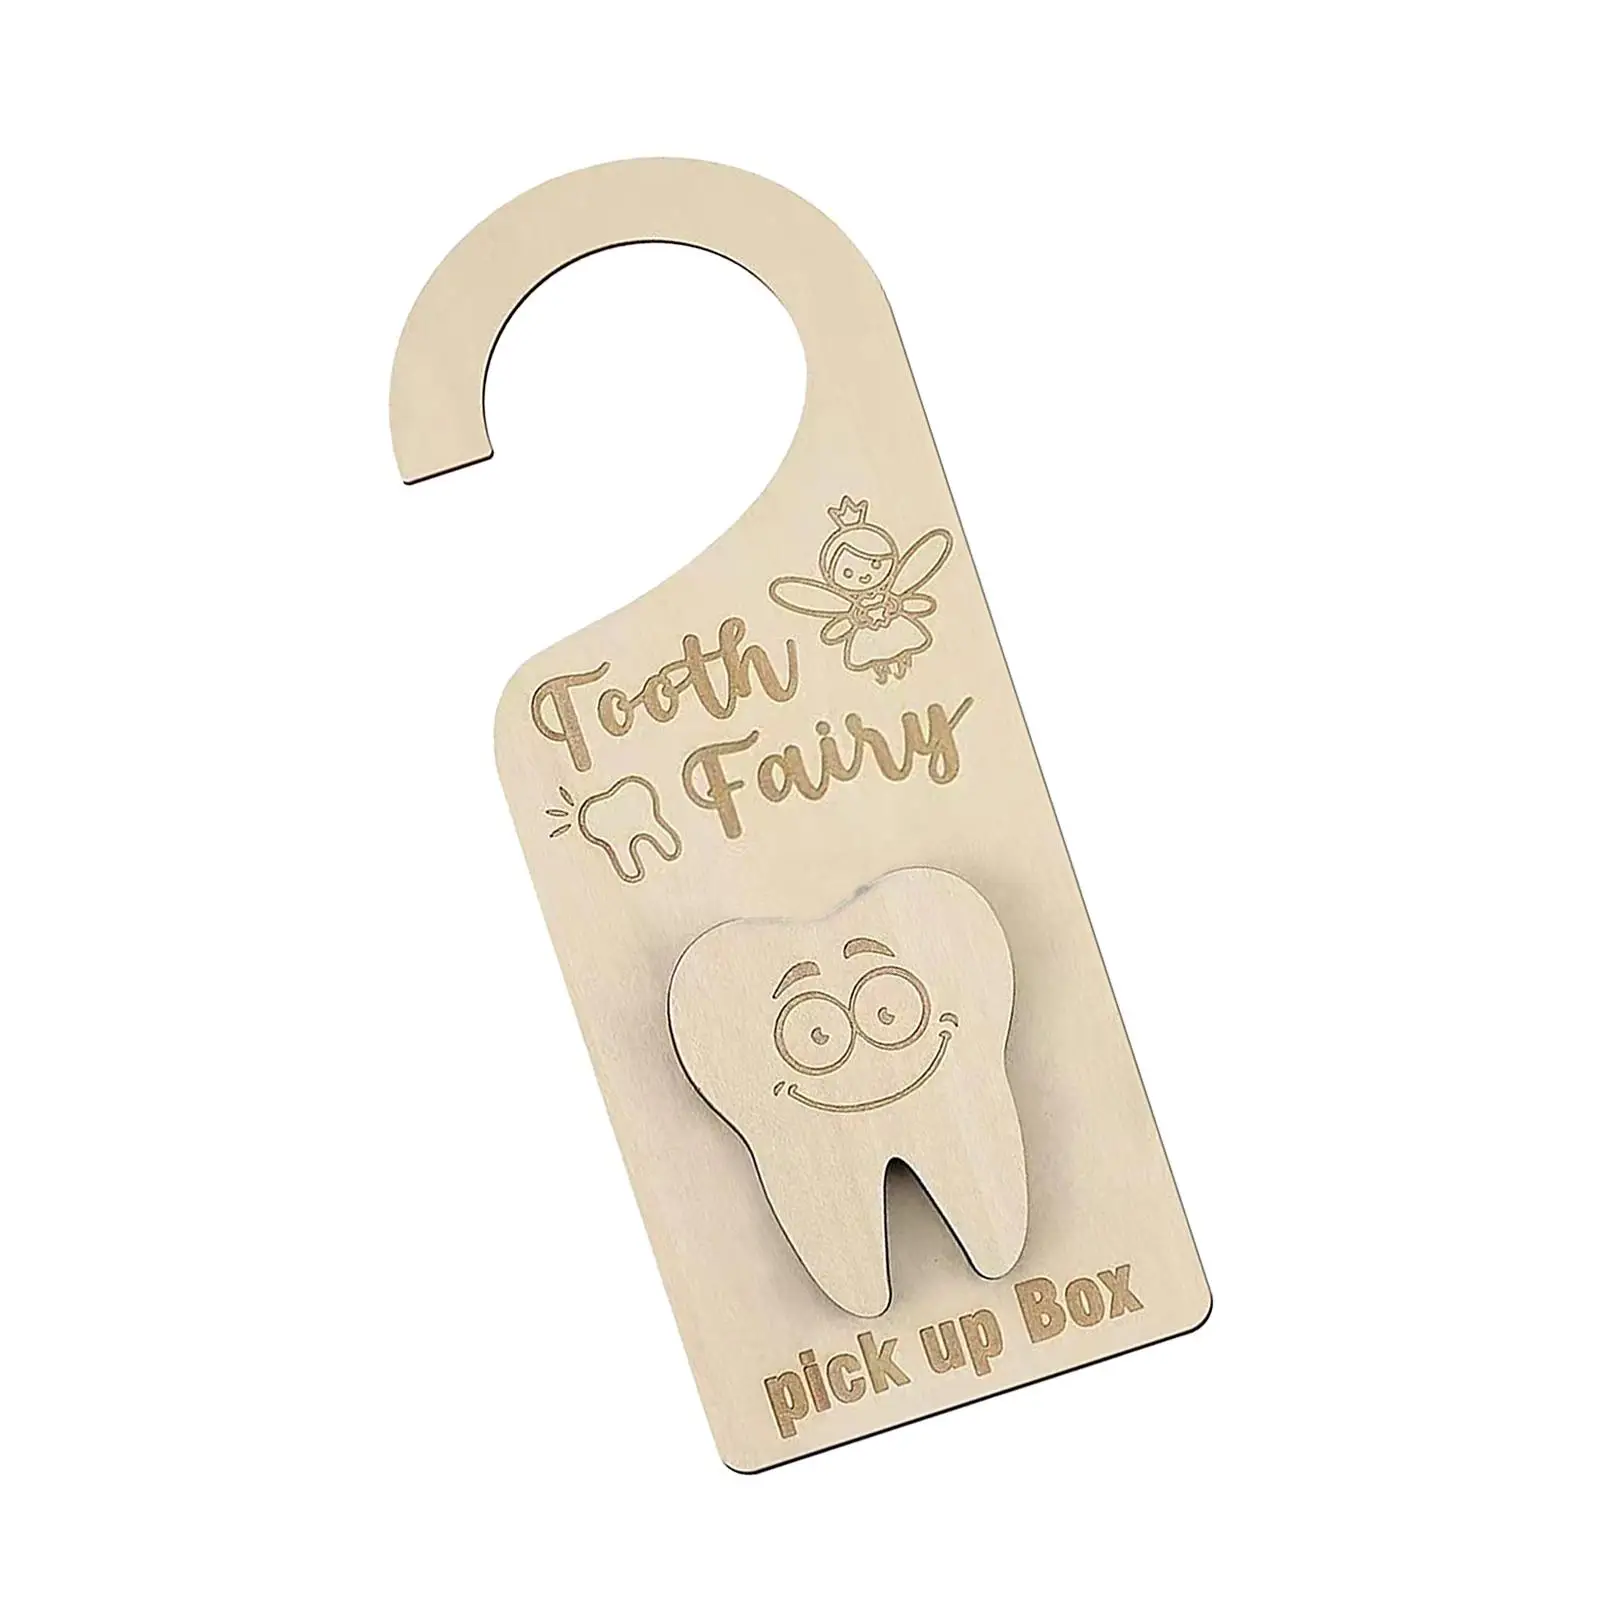 Wood Tooth Fairy Door Hanger Keepsake Organizer Case Encourage Gift Tooth Fairy Pick up Box for Toddlers Children Girls Boys